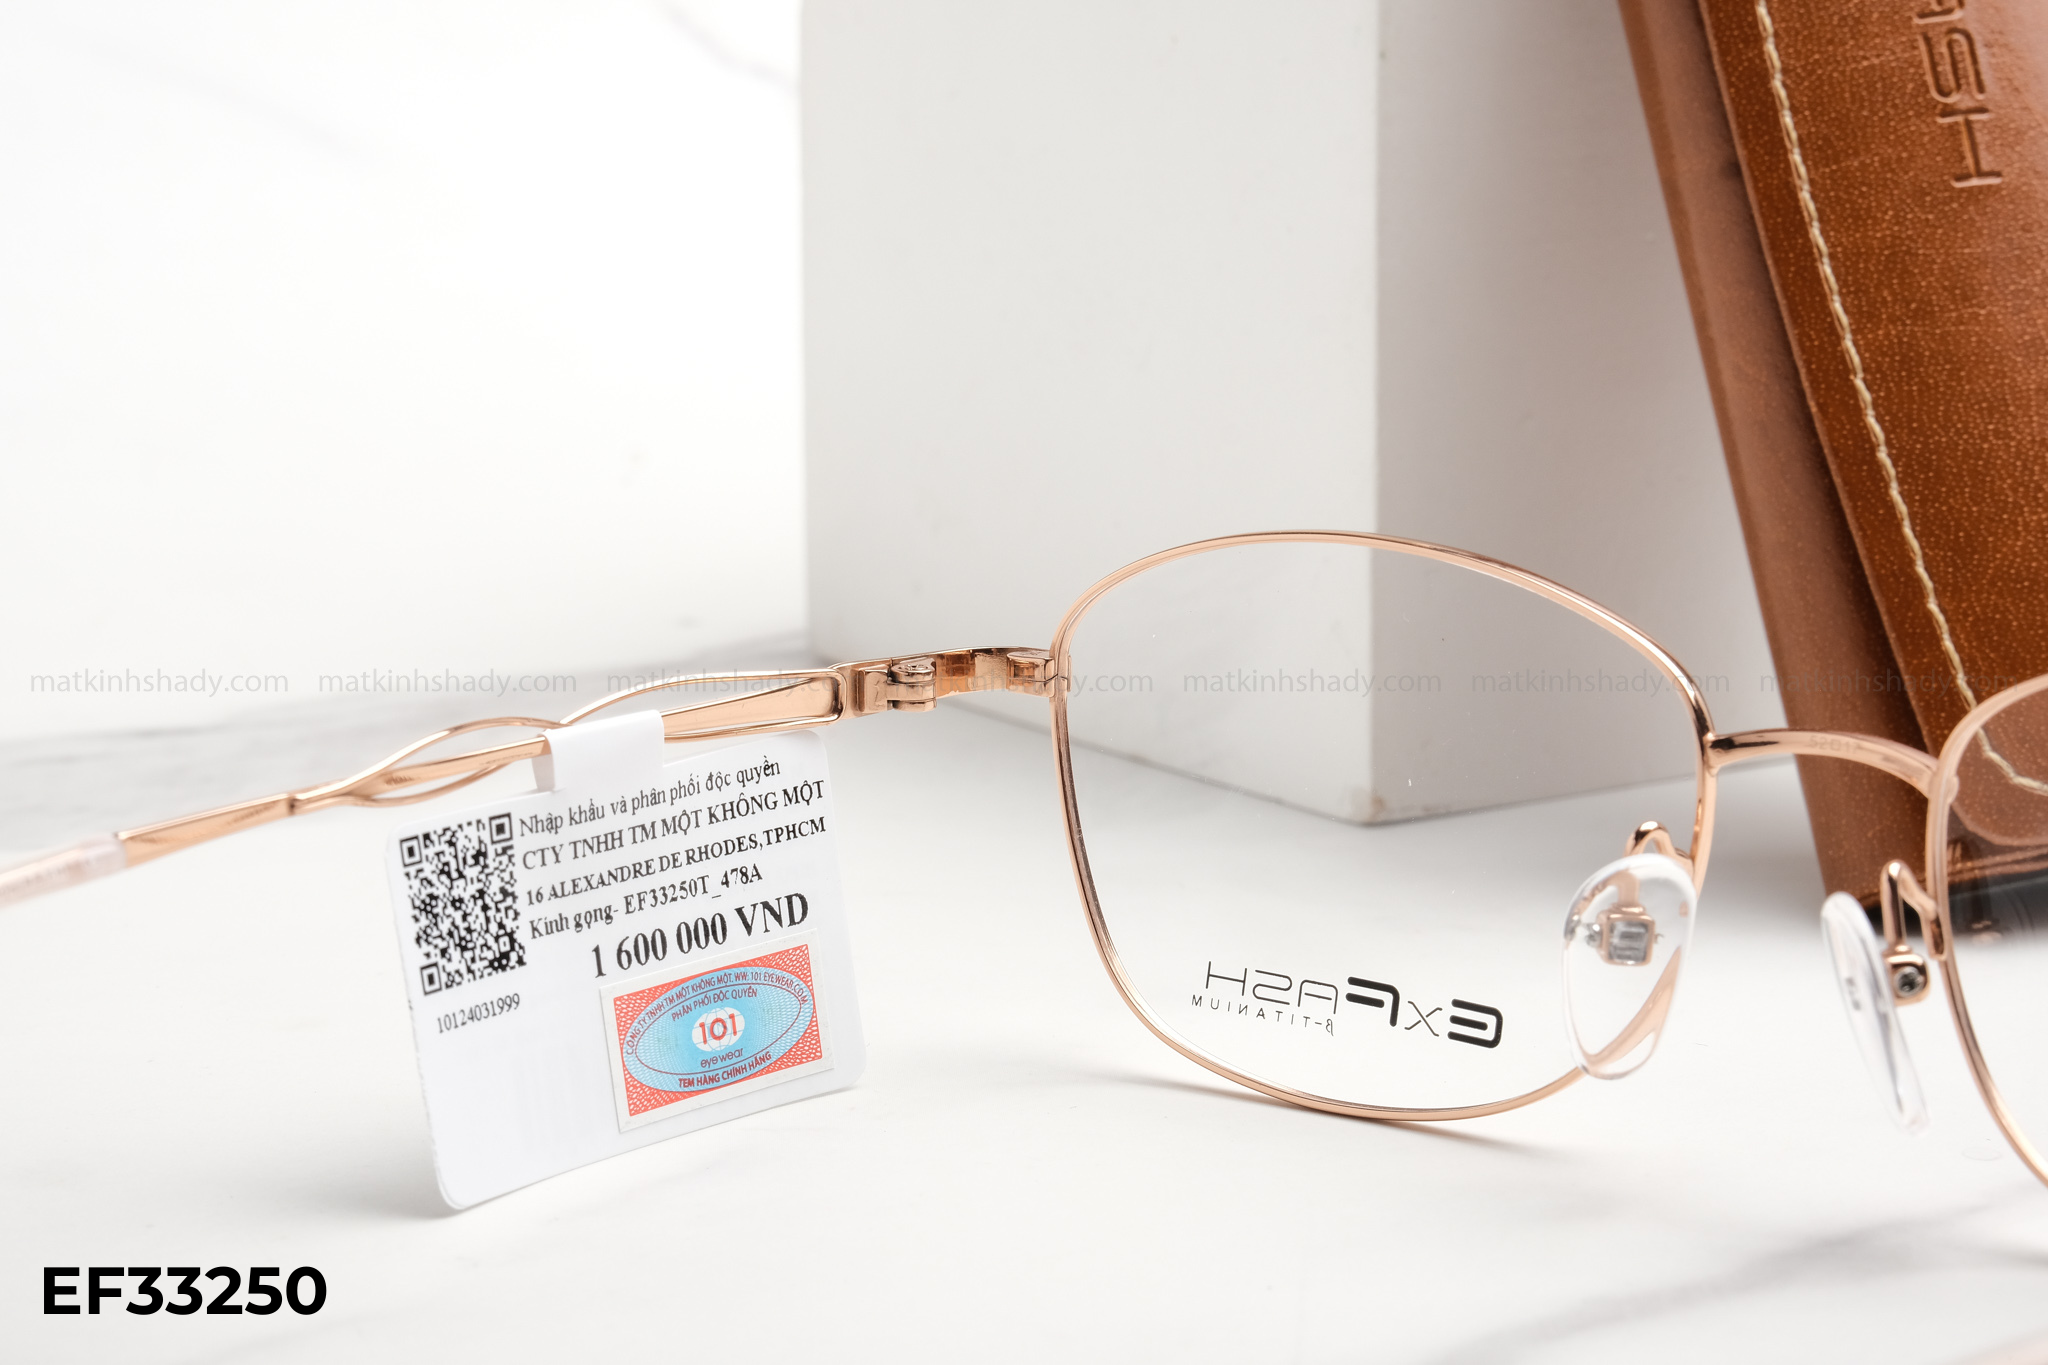  Exfash Eyewear - Glasses - EF33250 